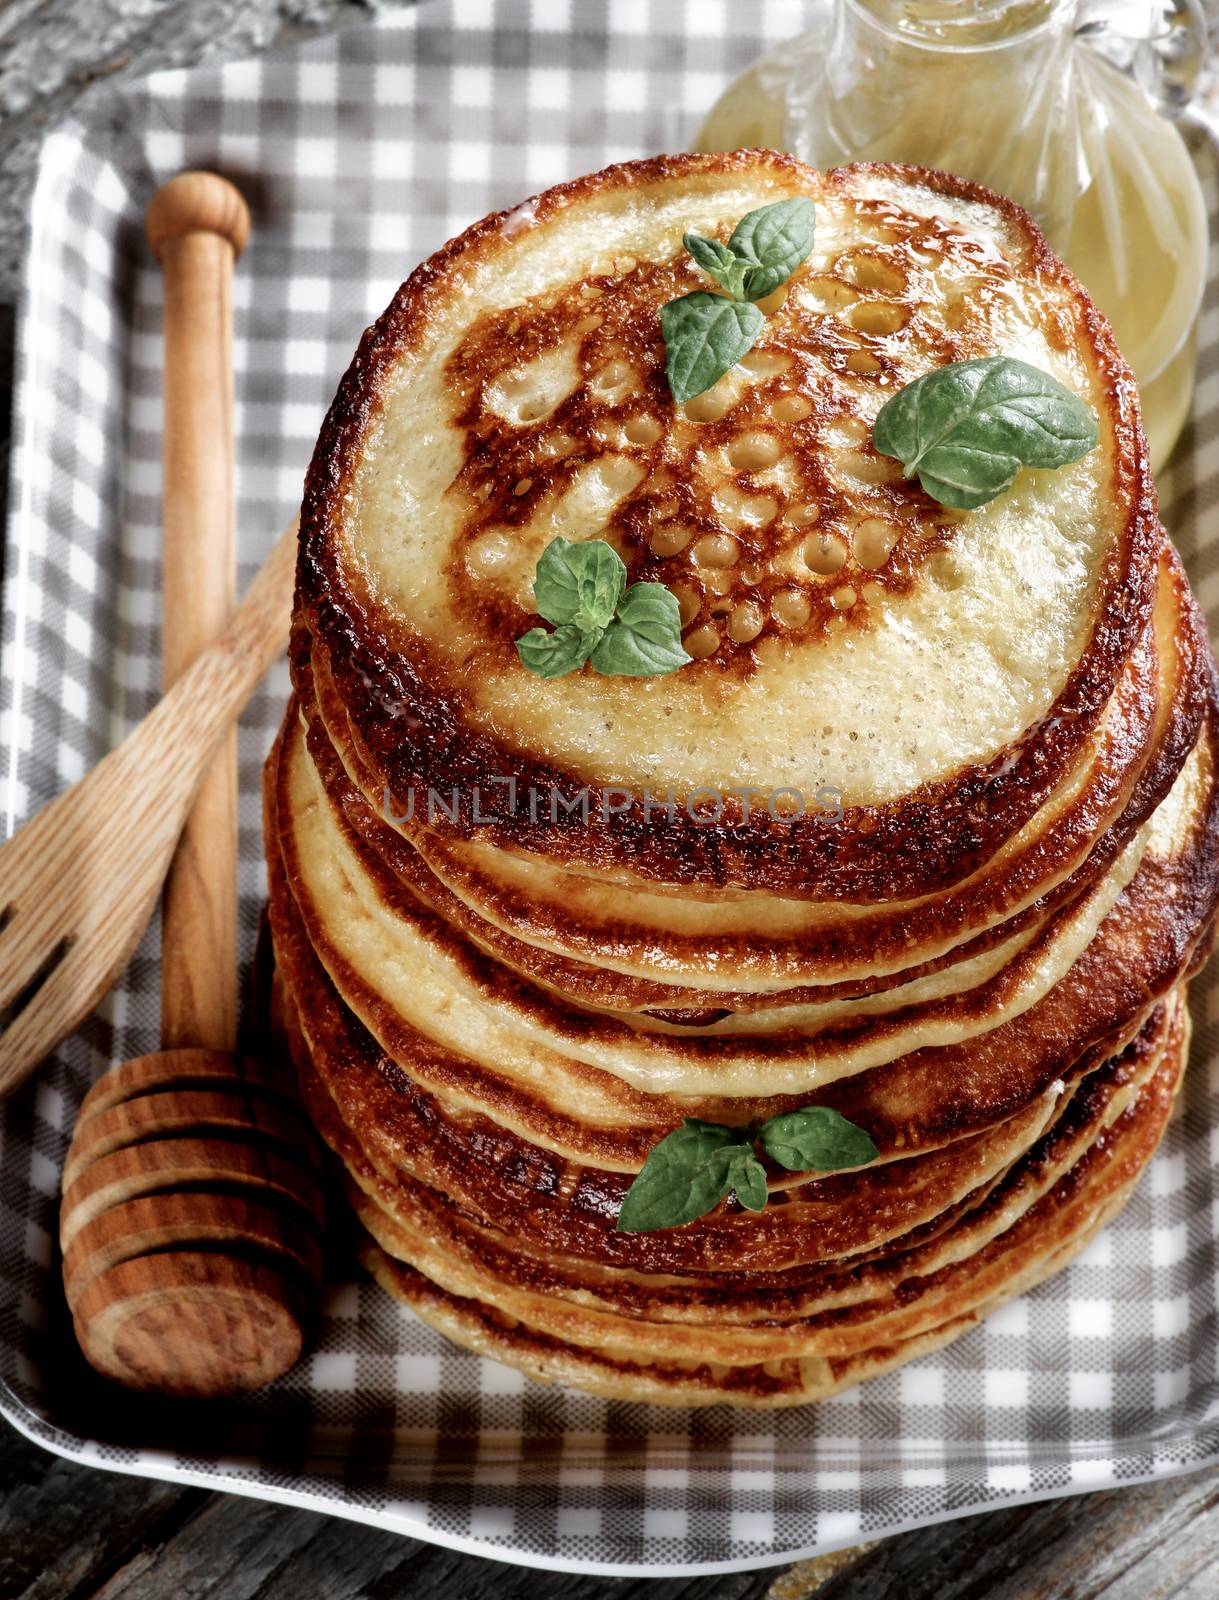 Pancakes with Honey by zhekos